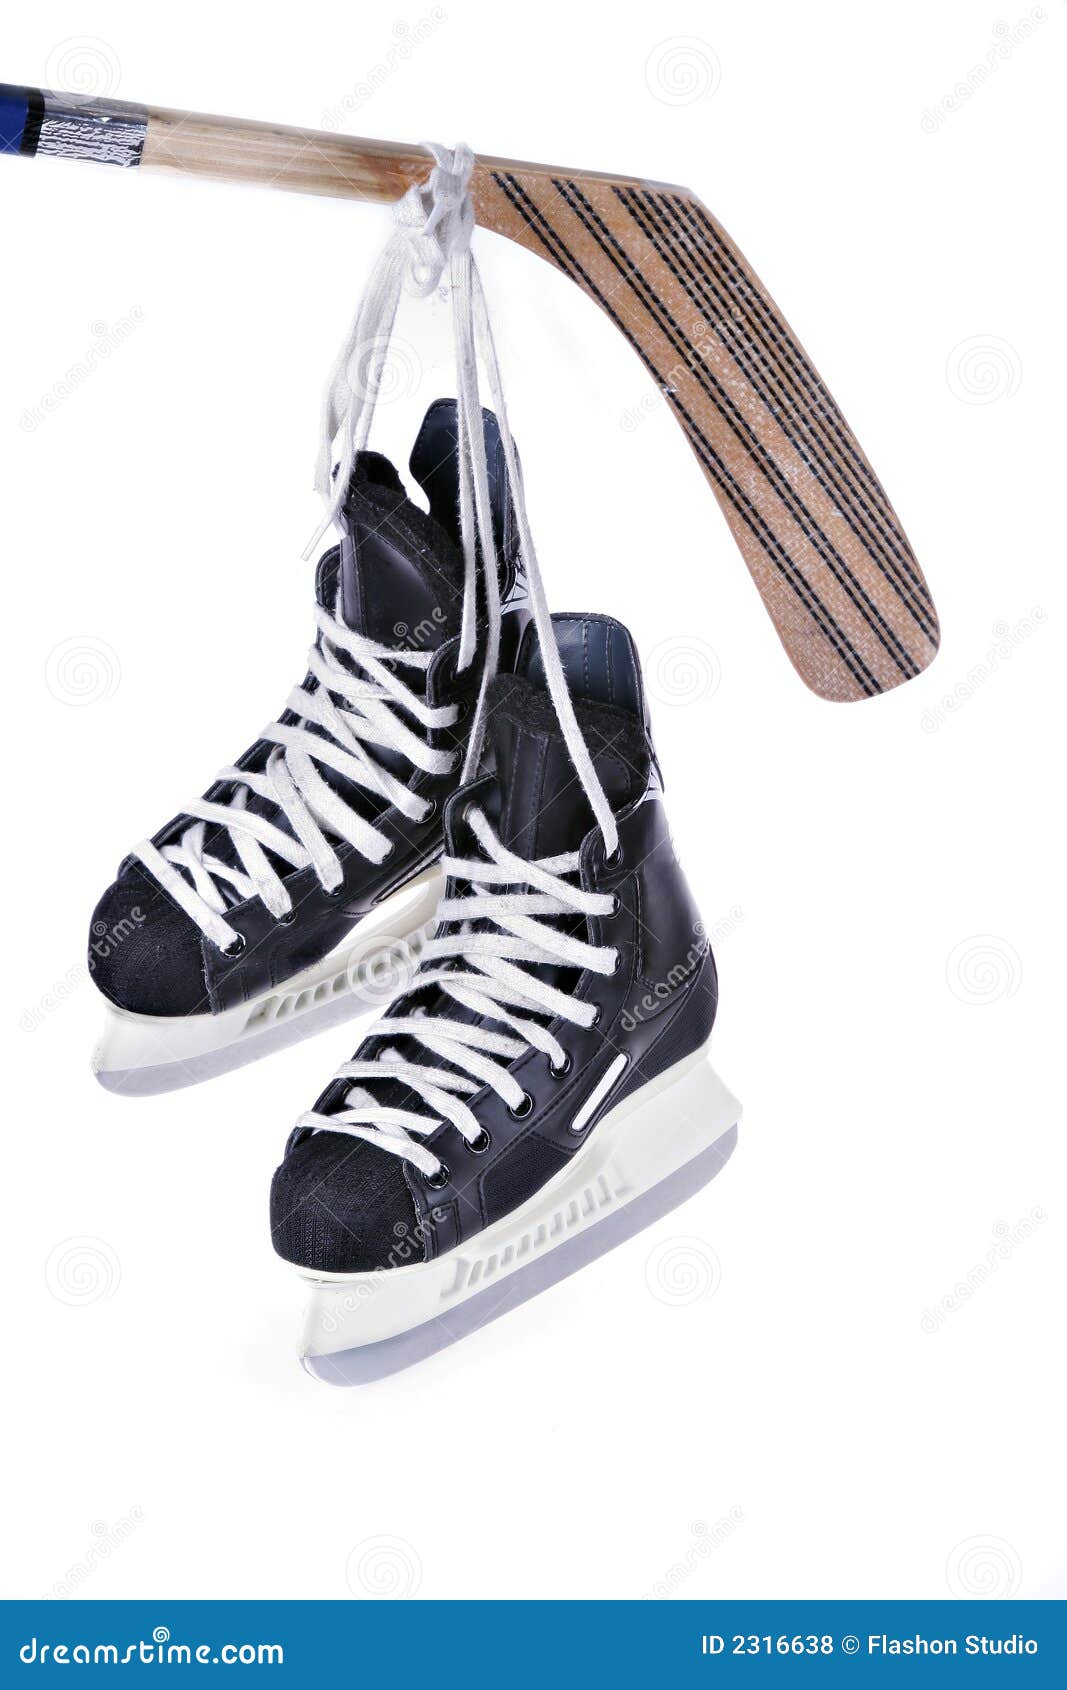 hockey skates and stick